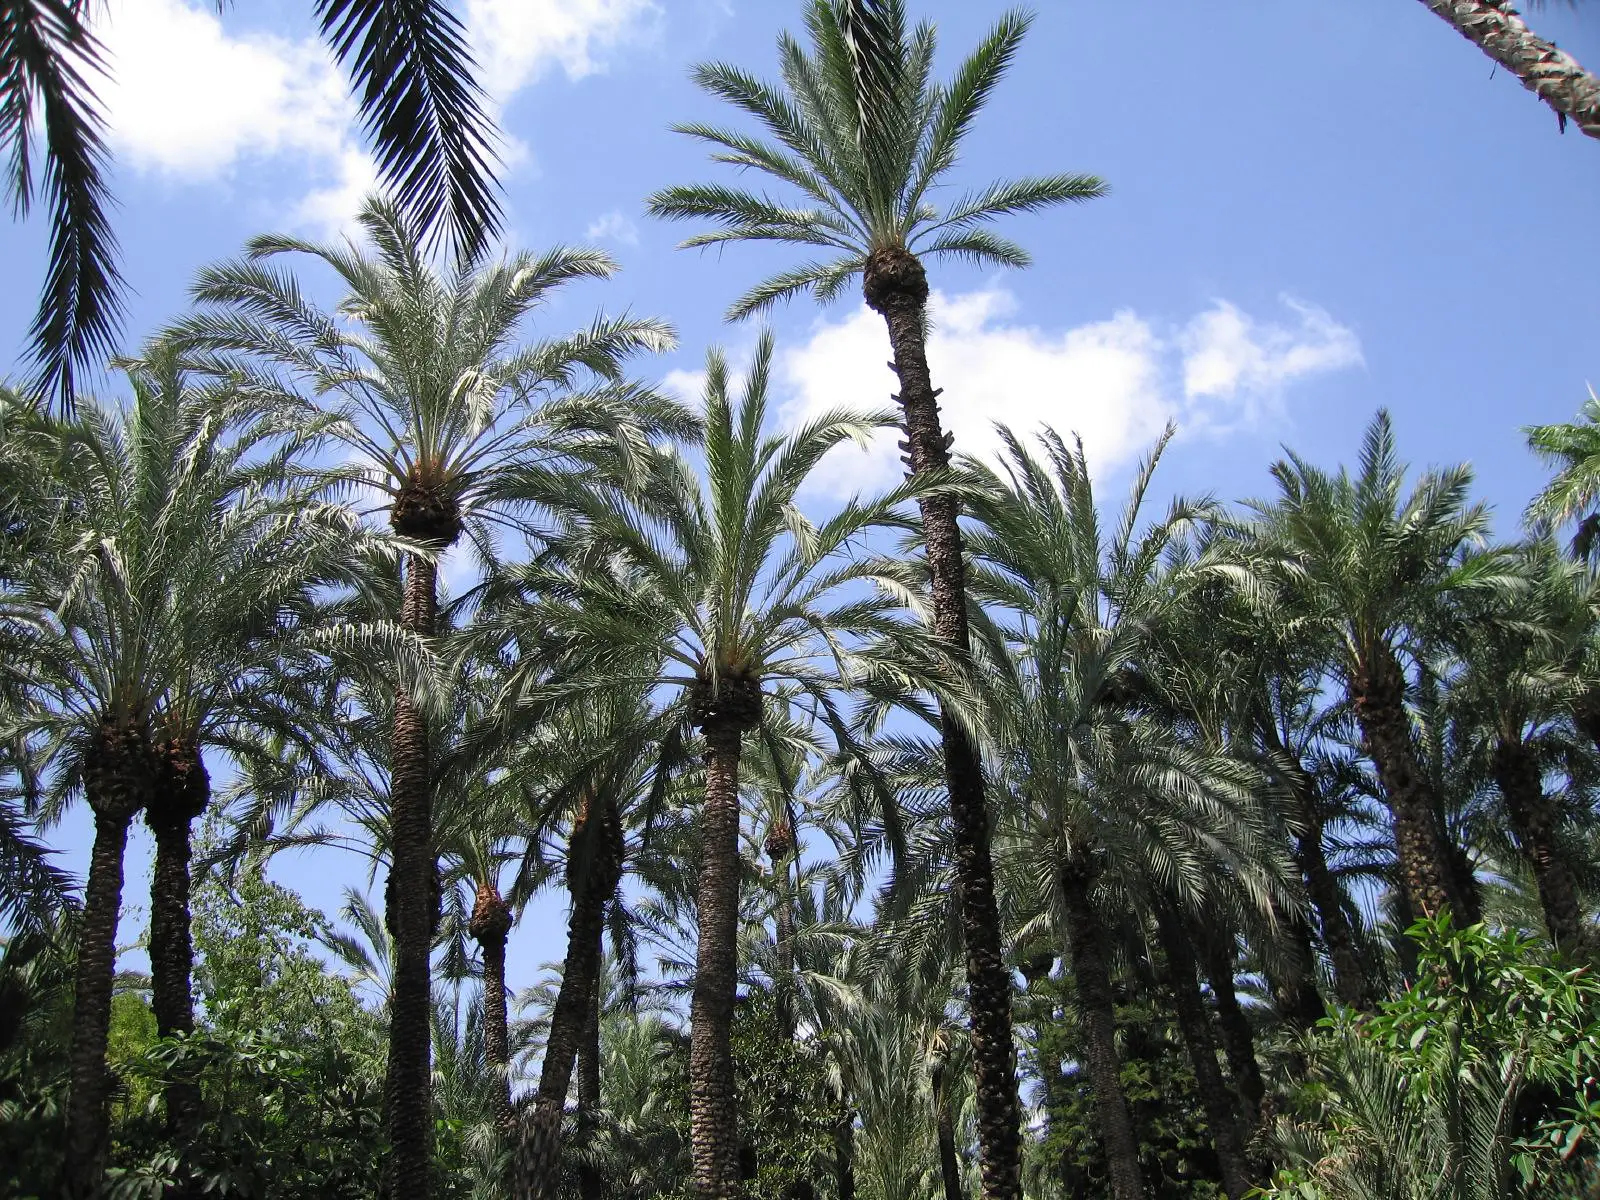 Huerto del Cura de Elche, the home of the eight-armed palm tree